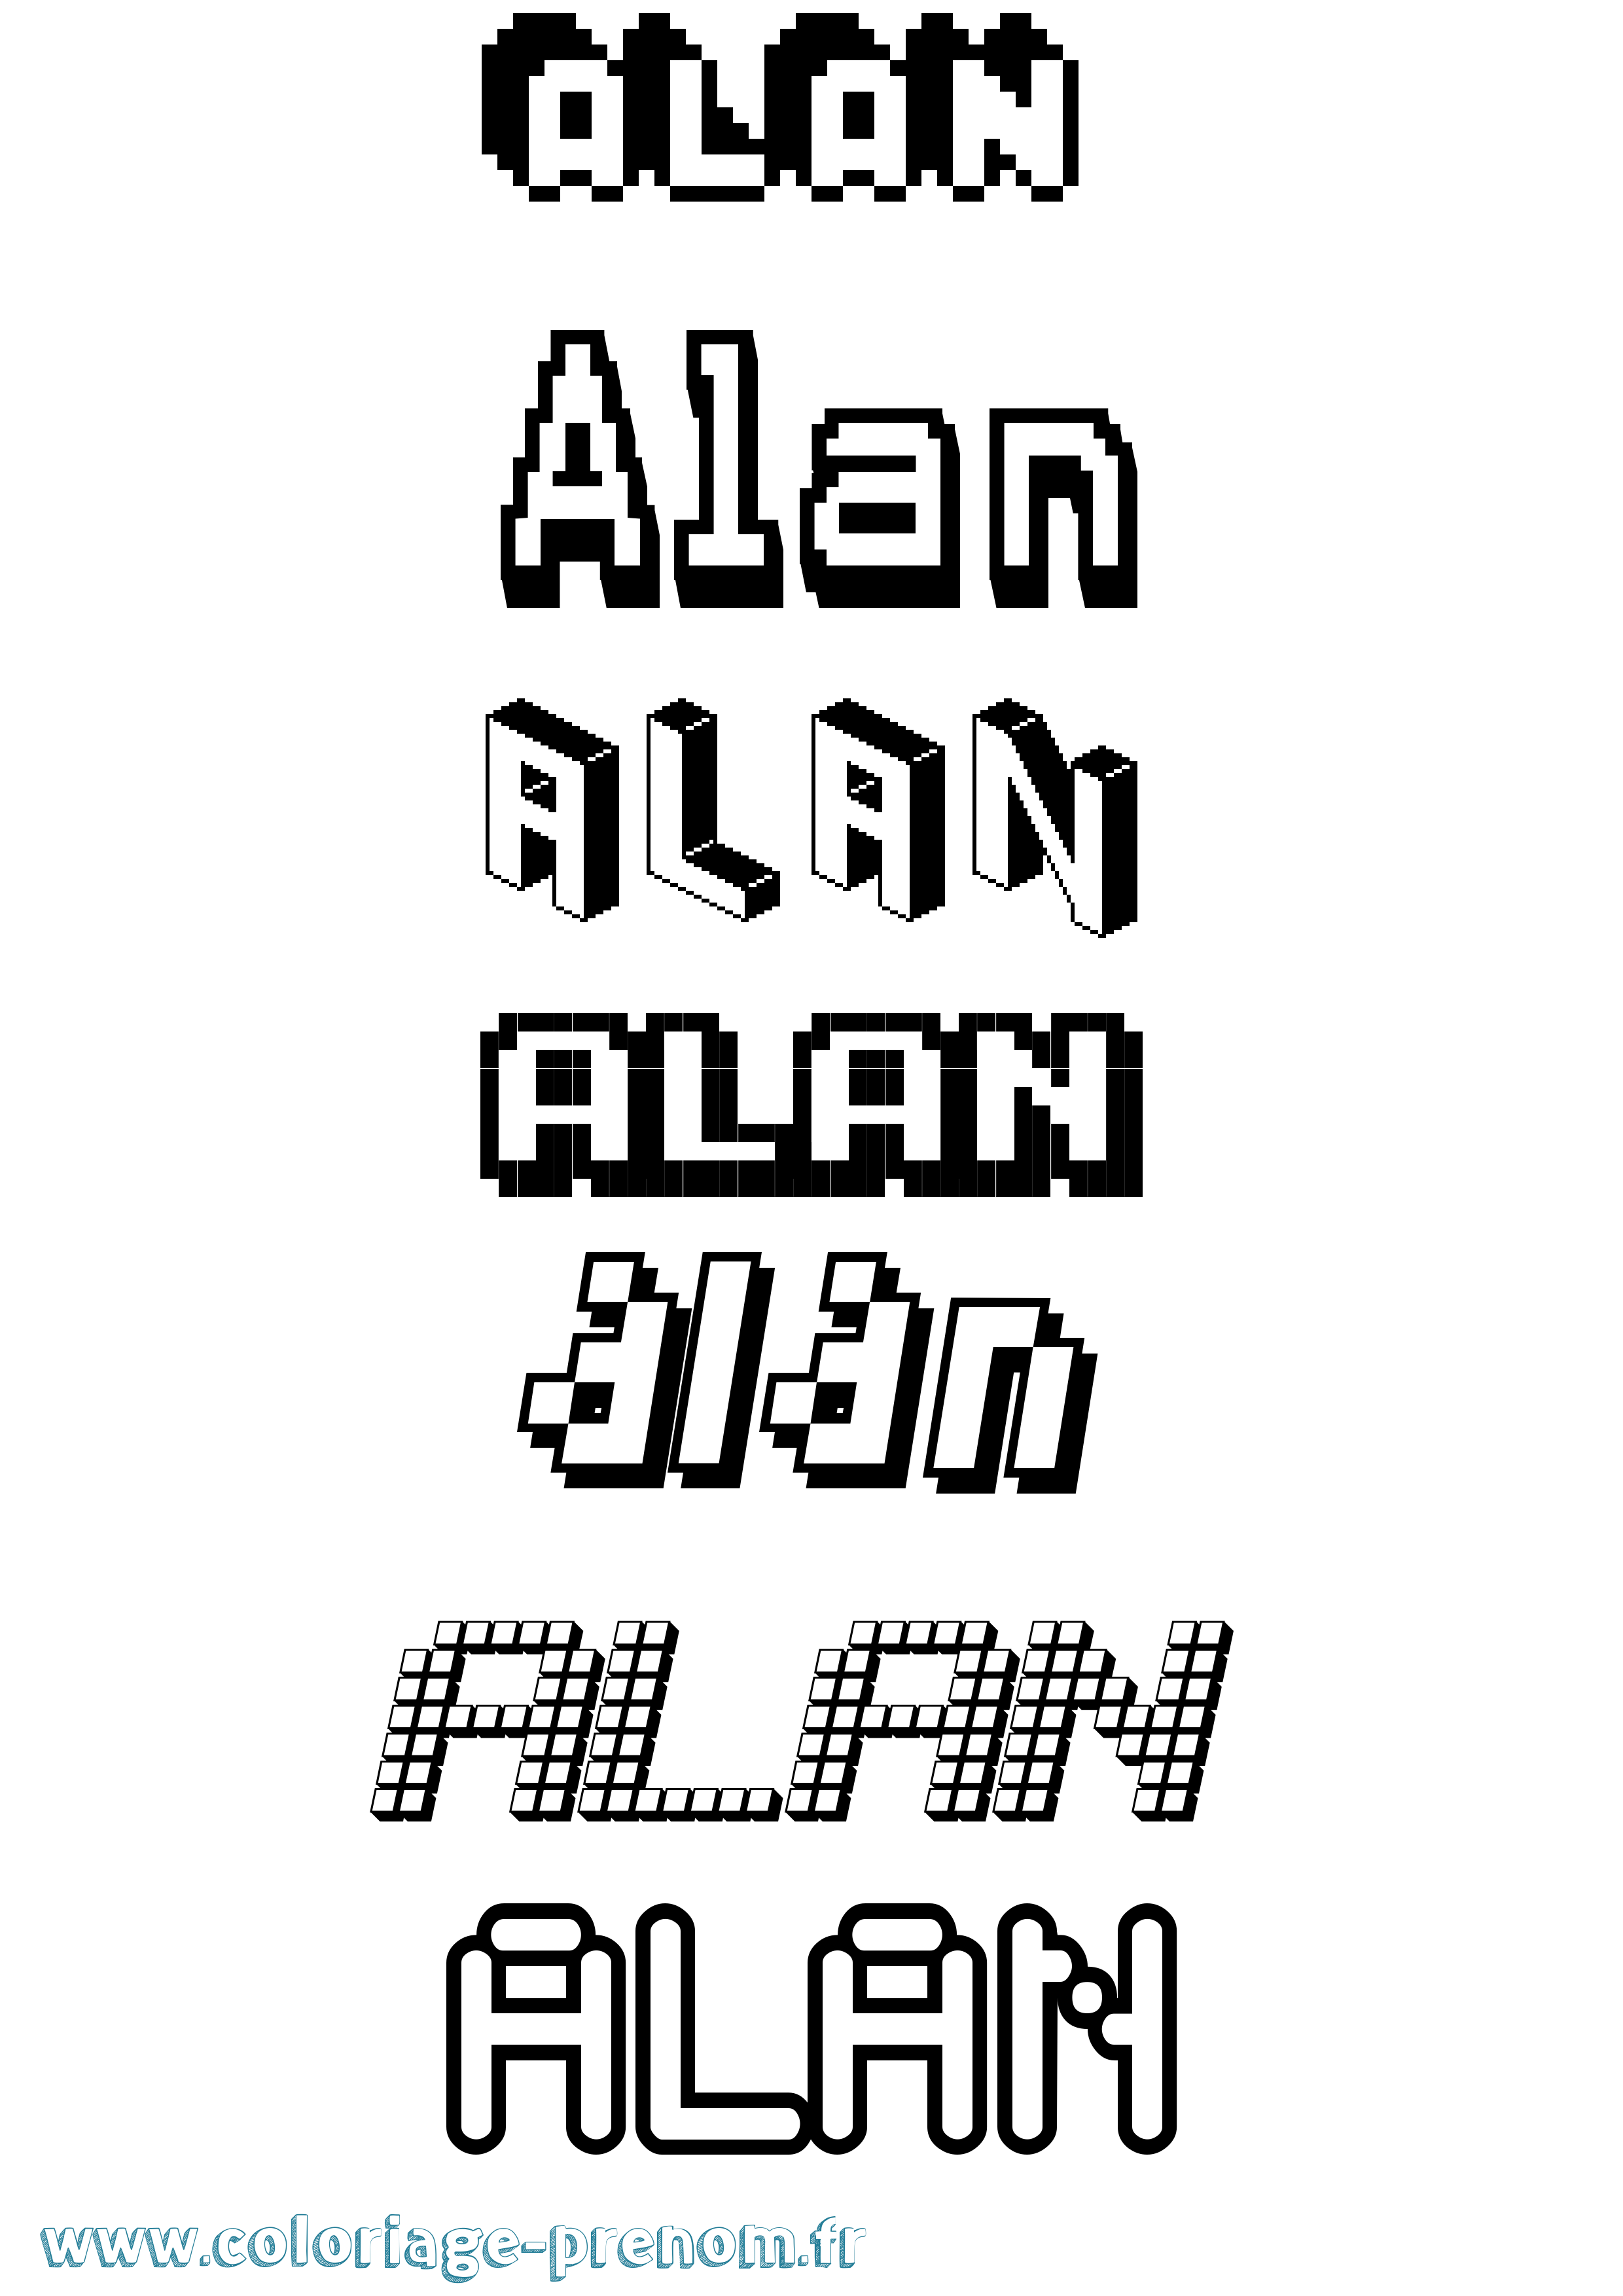 Coloriage prénom Alan Pixel